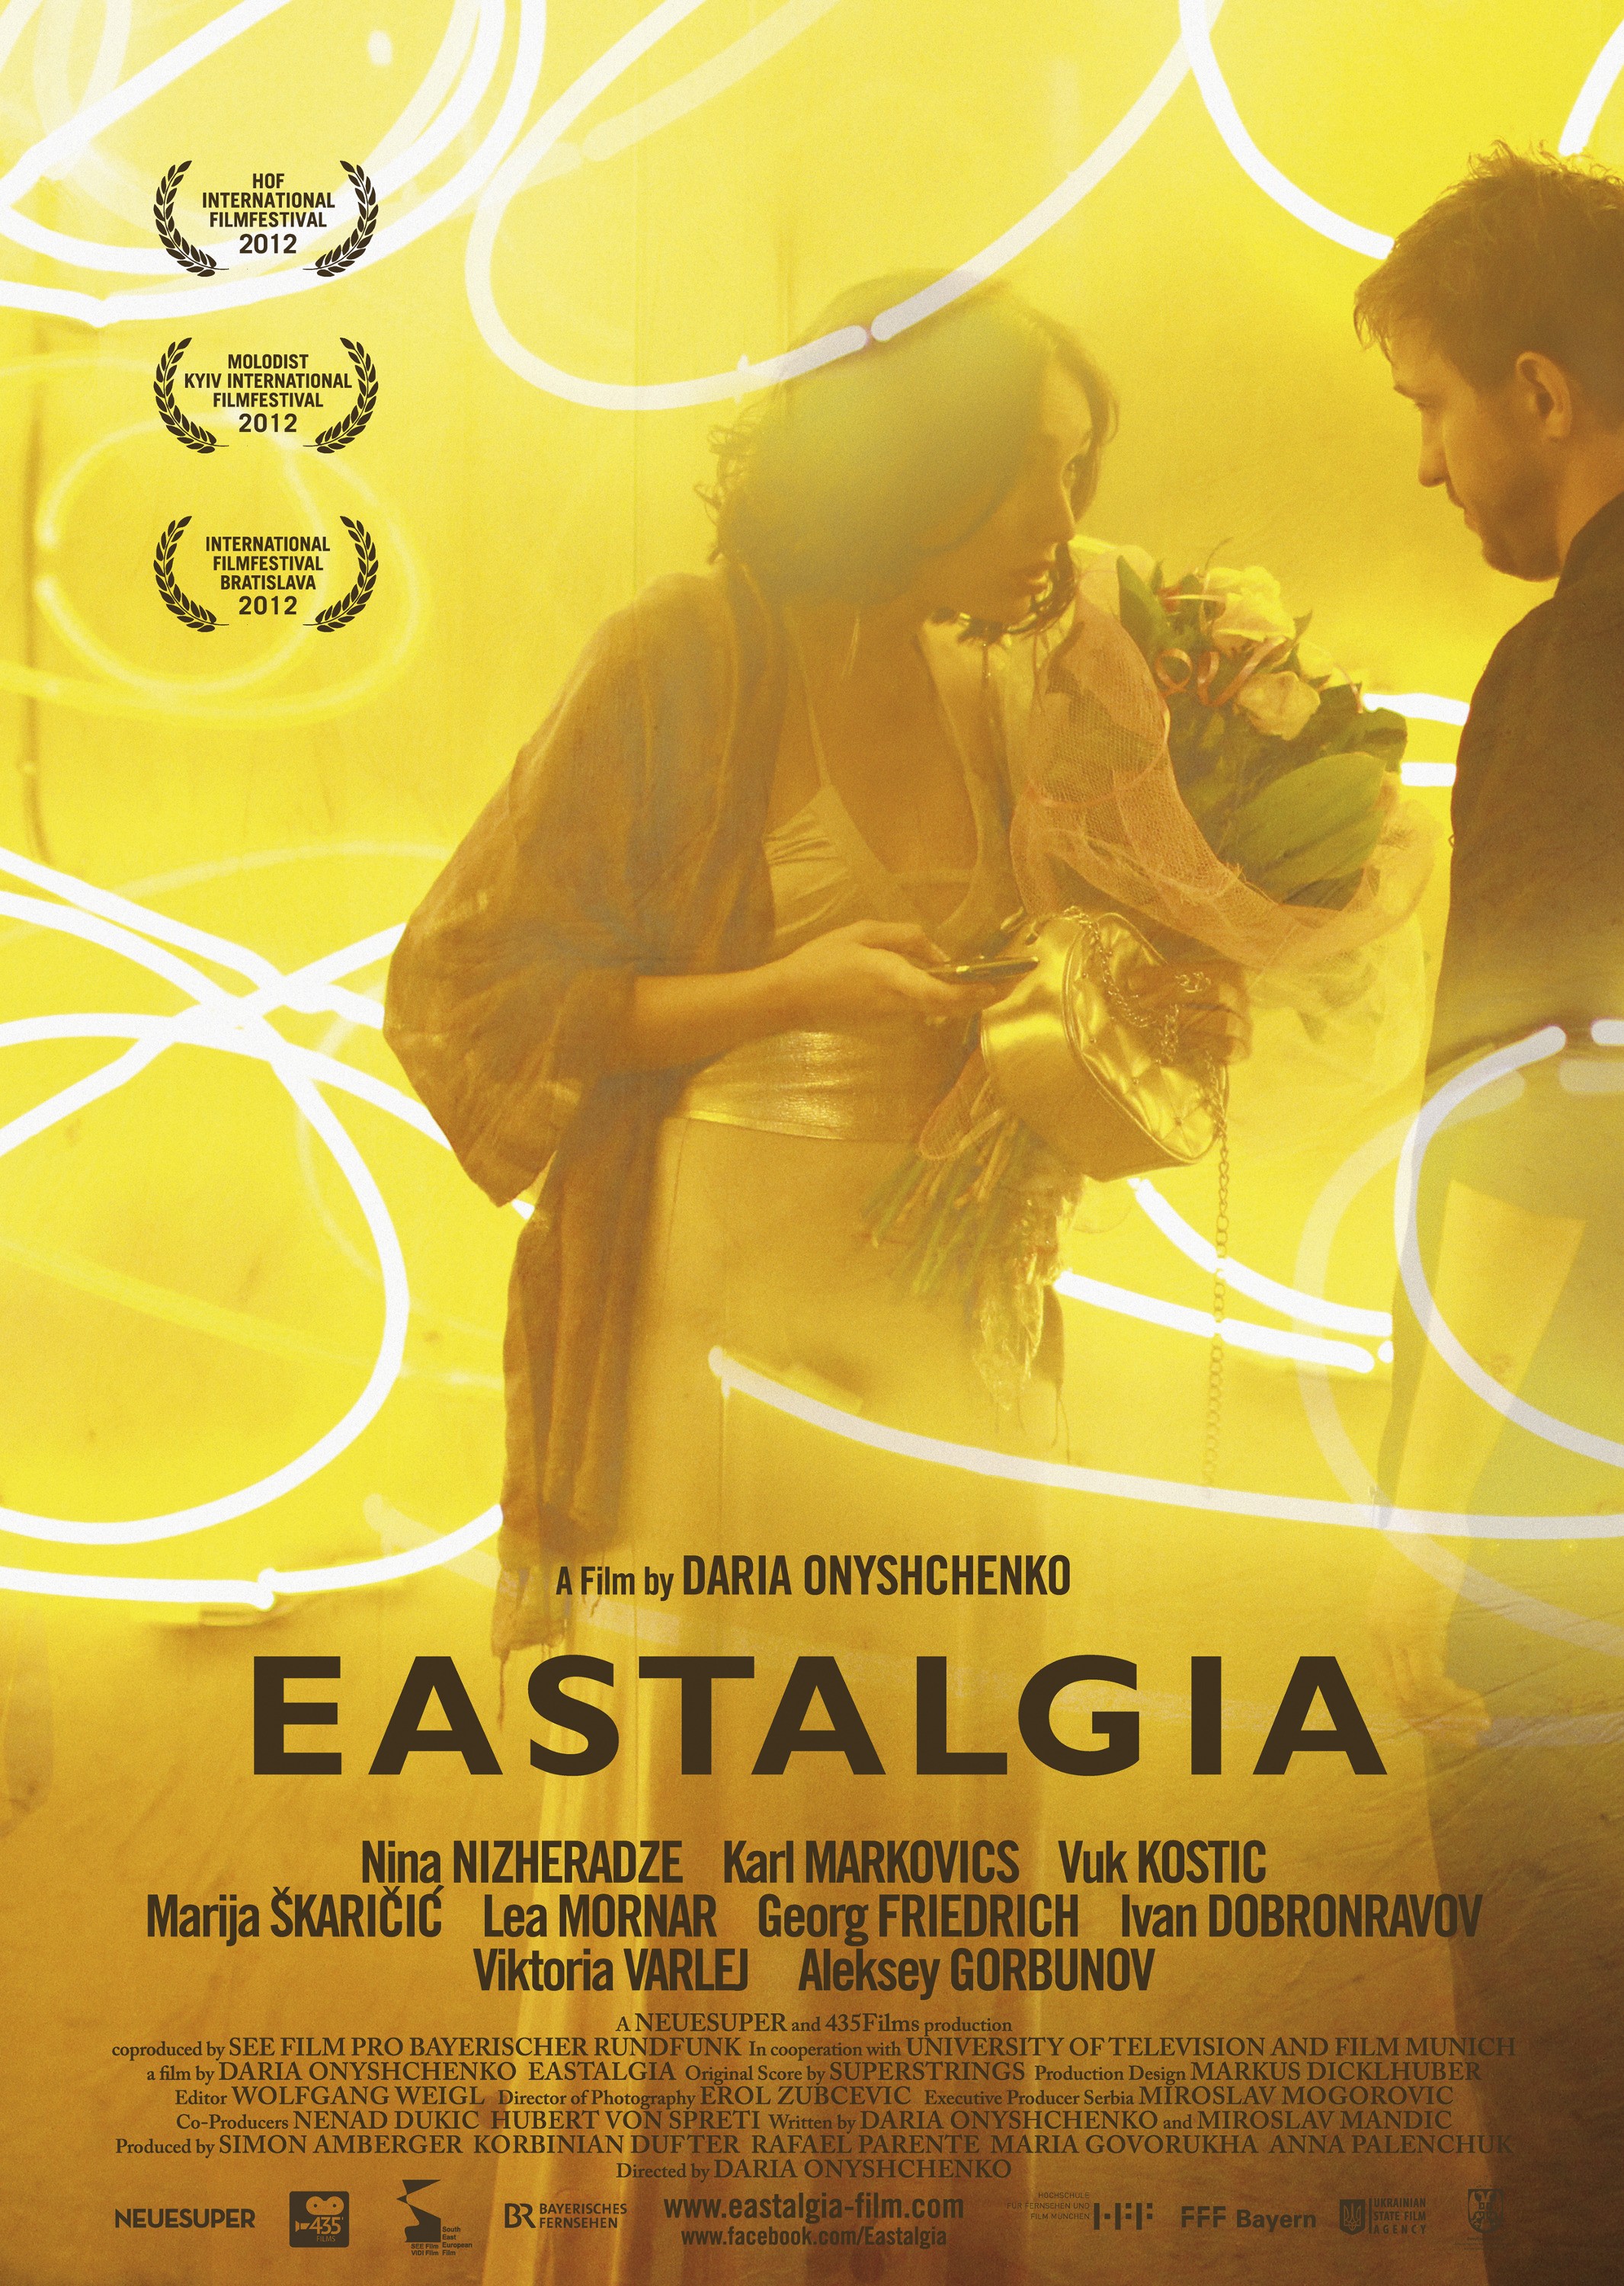 Mega Sized Movie Poster Image for Eastalgia 